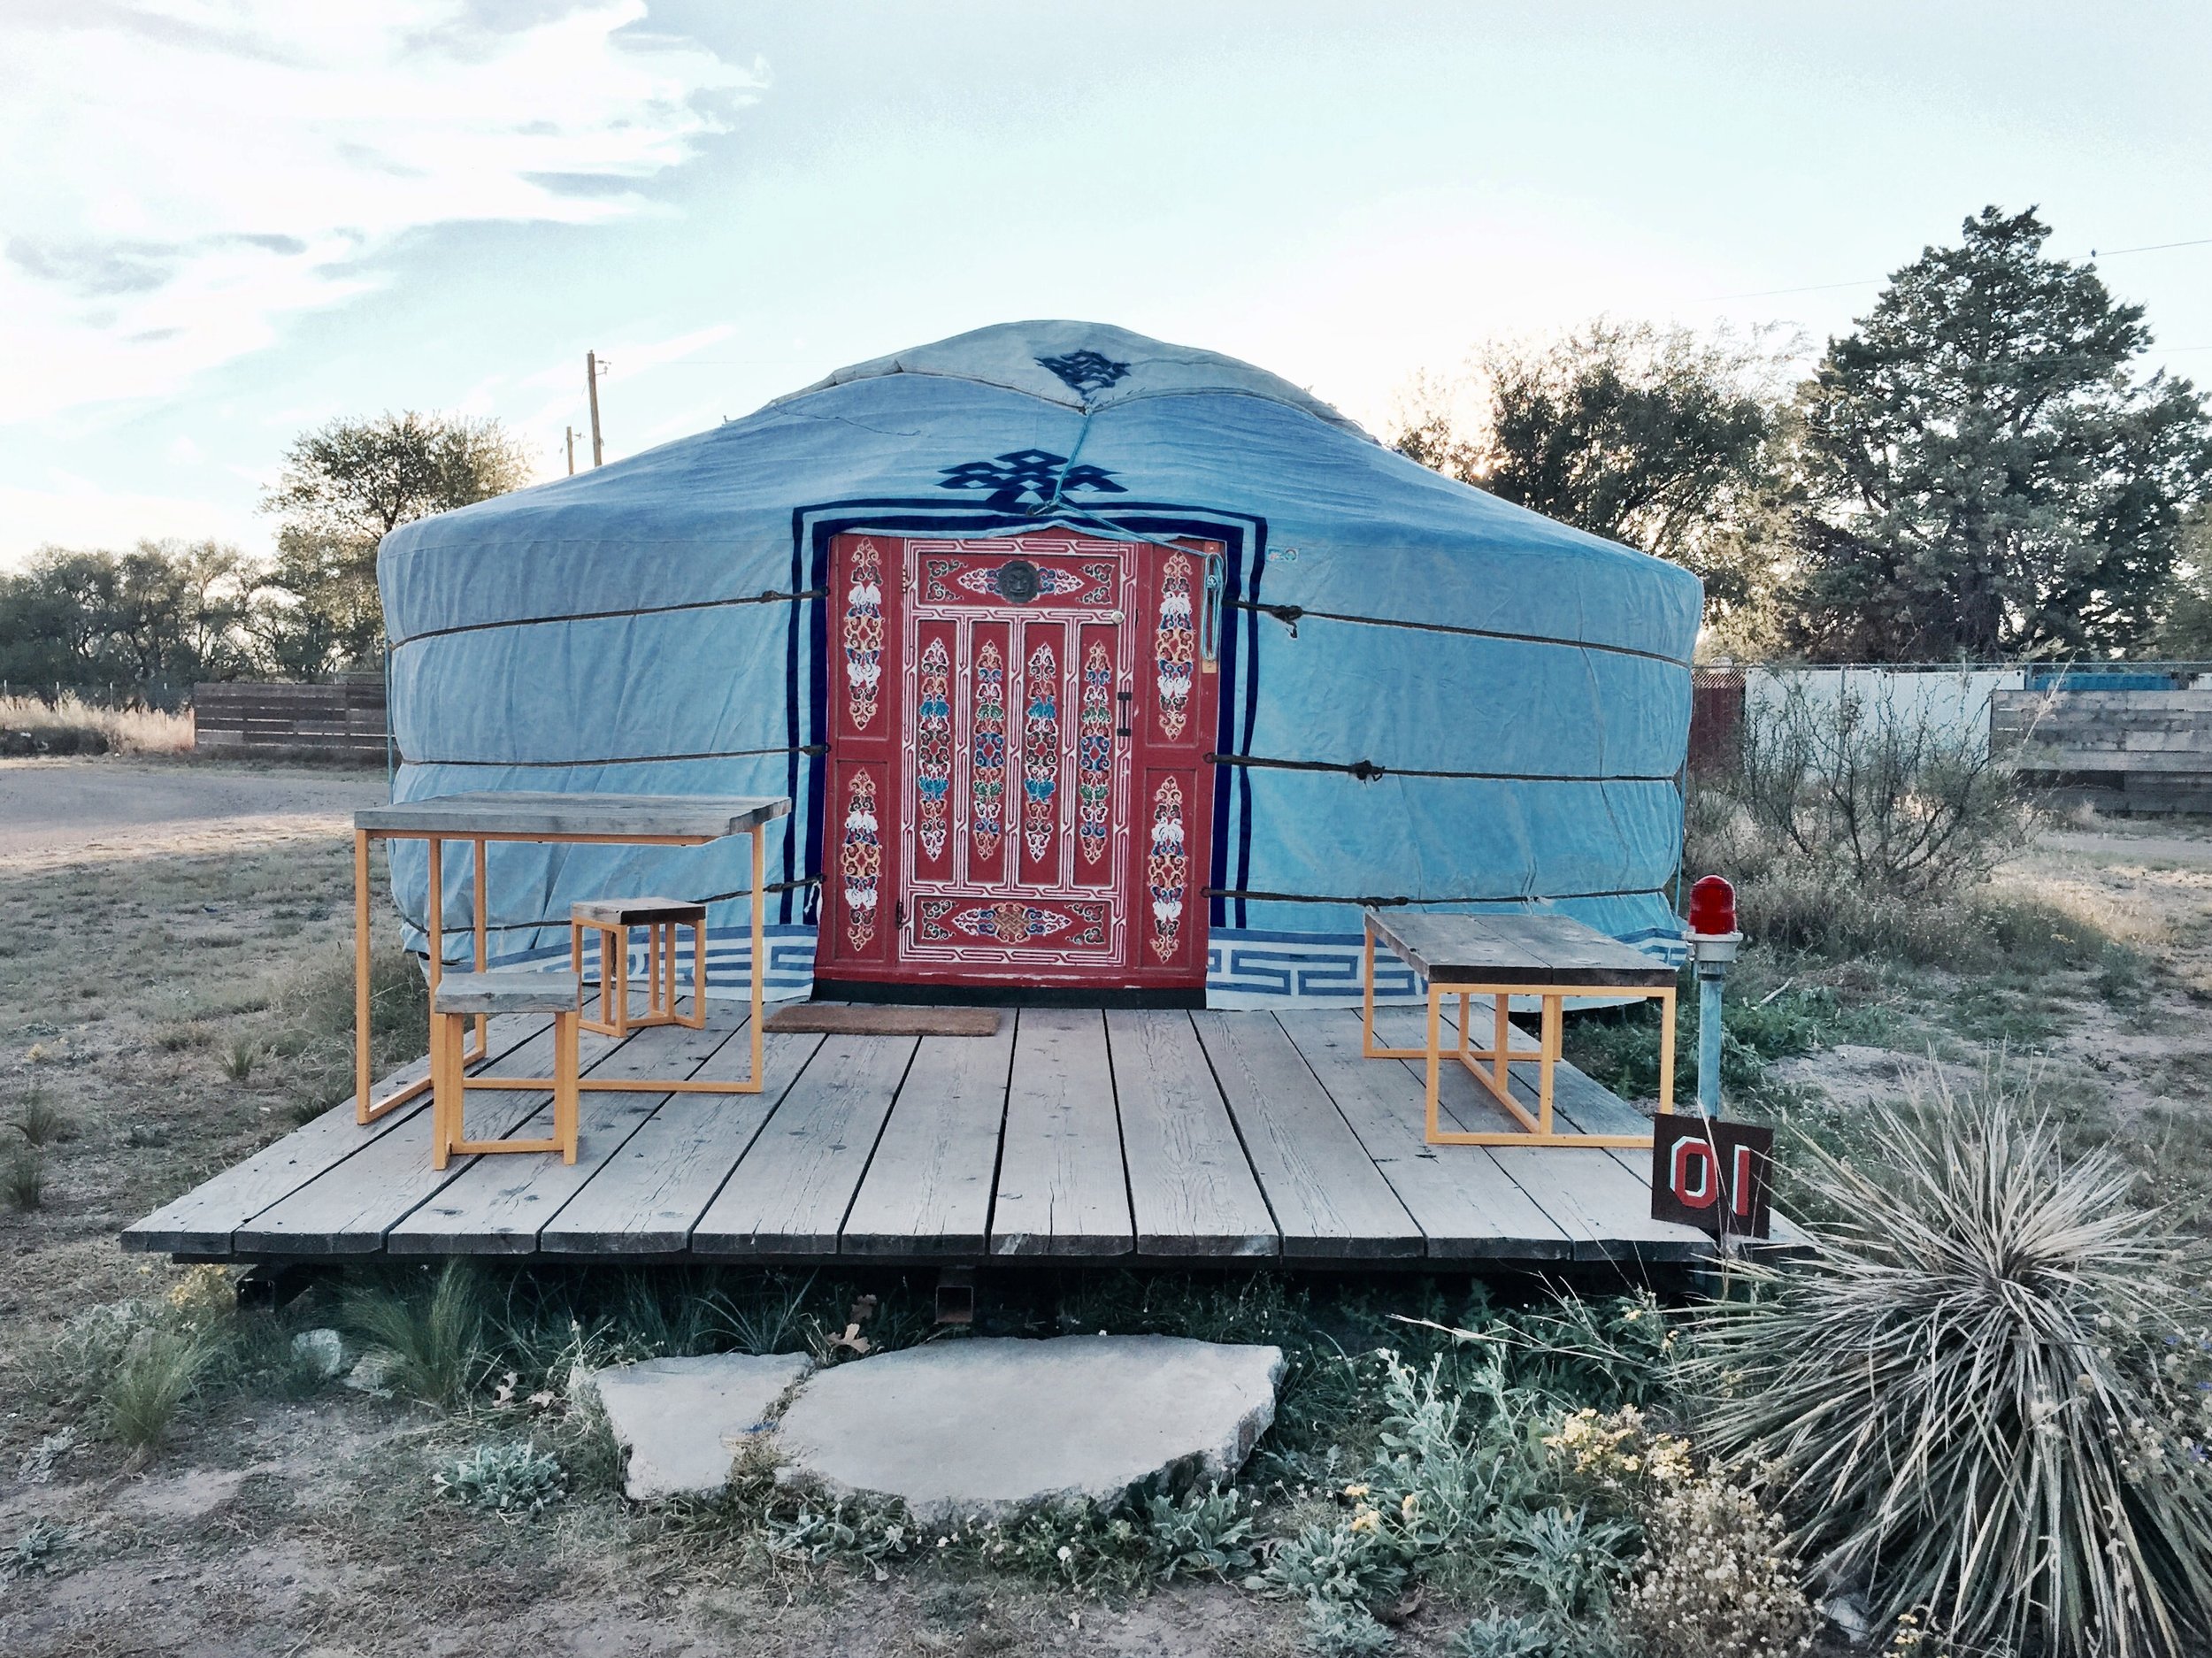 The Mongolian Yurt